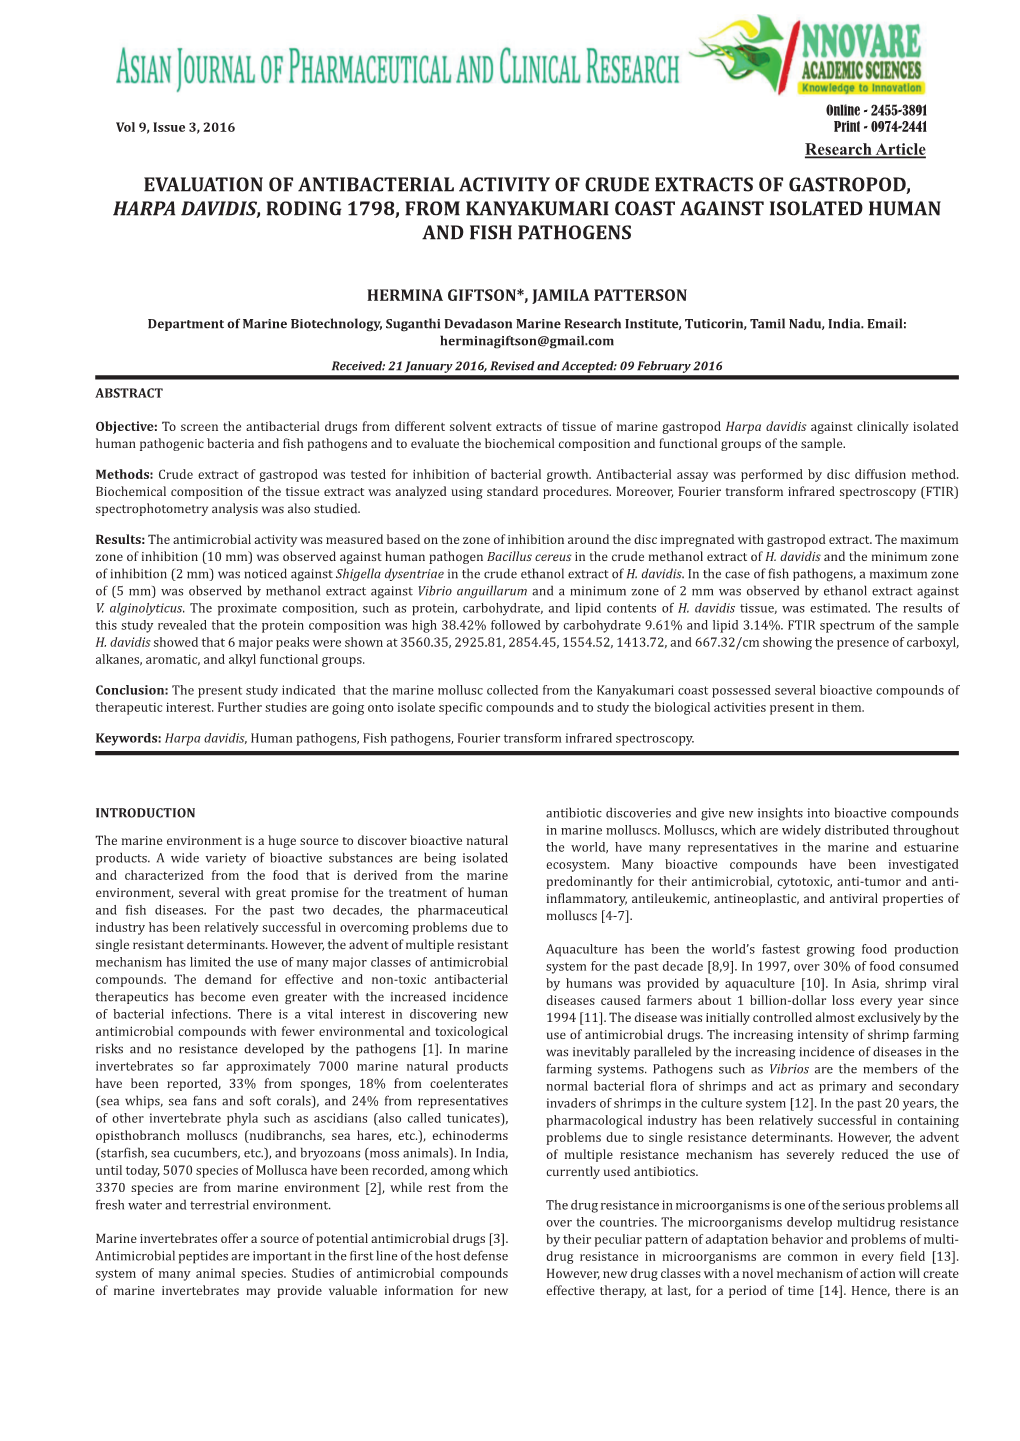 Evaluation of Antibacterial Activity of Crude Extracts of Gastropod, Harpa Davidis, Roding 1798, from Kanyakumari Coast Against Isolated Human and Fish Pathogens